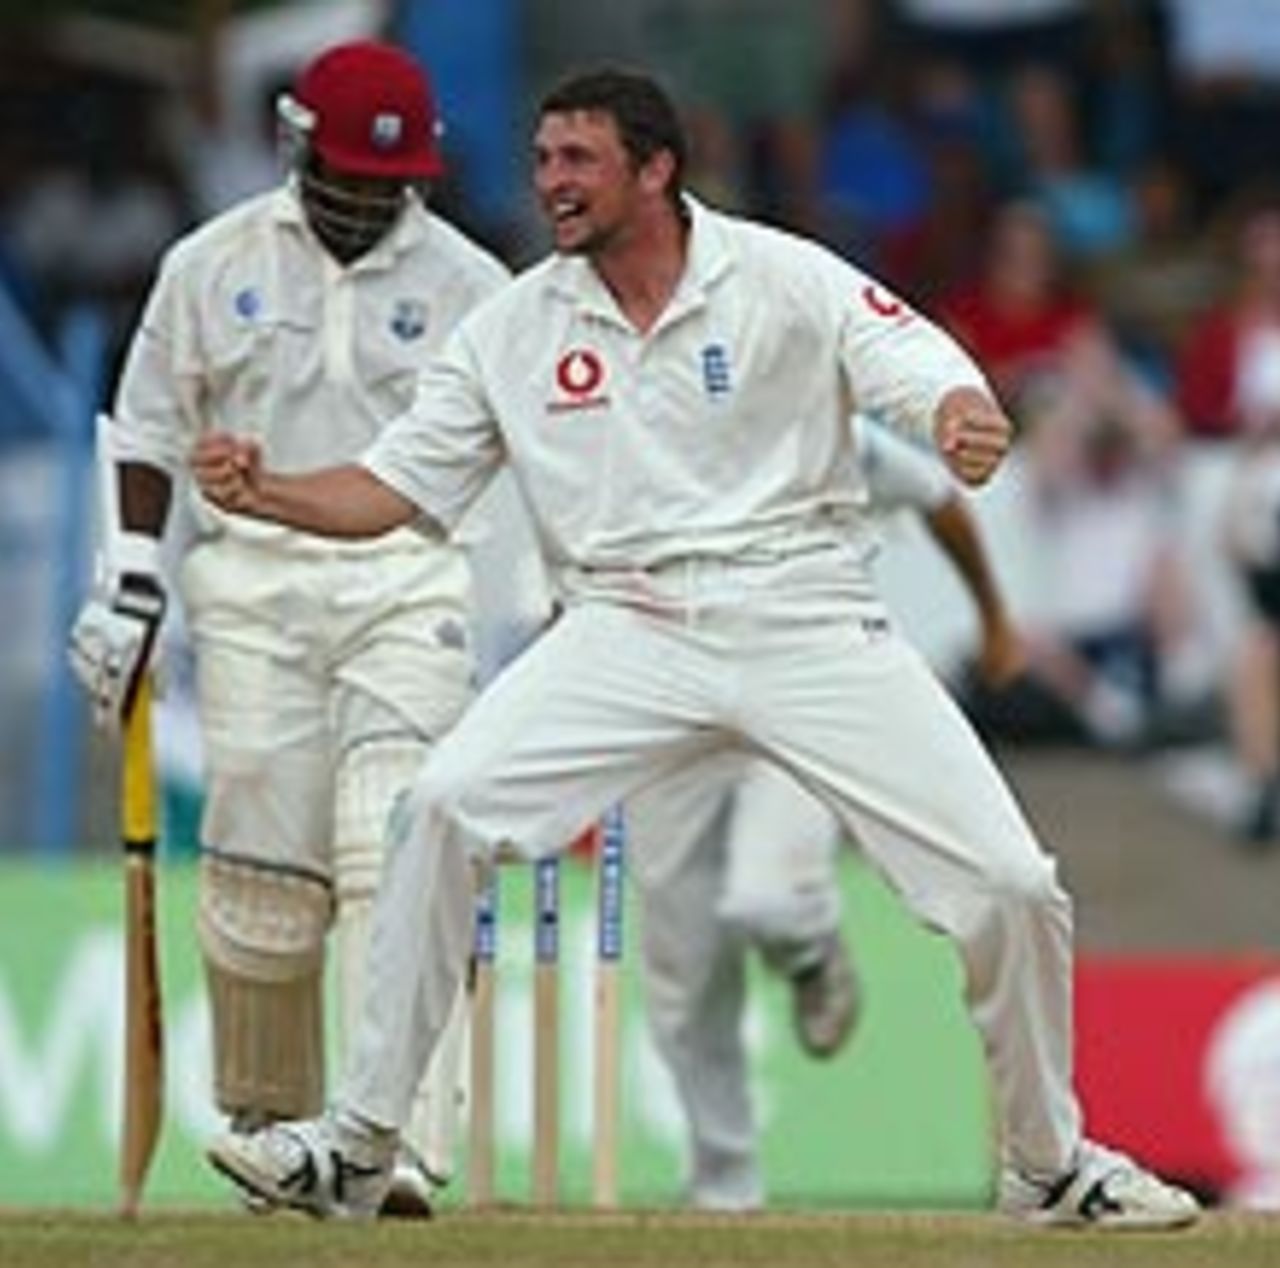 Harmison enjoys taking Lara's wicket in Trinidad